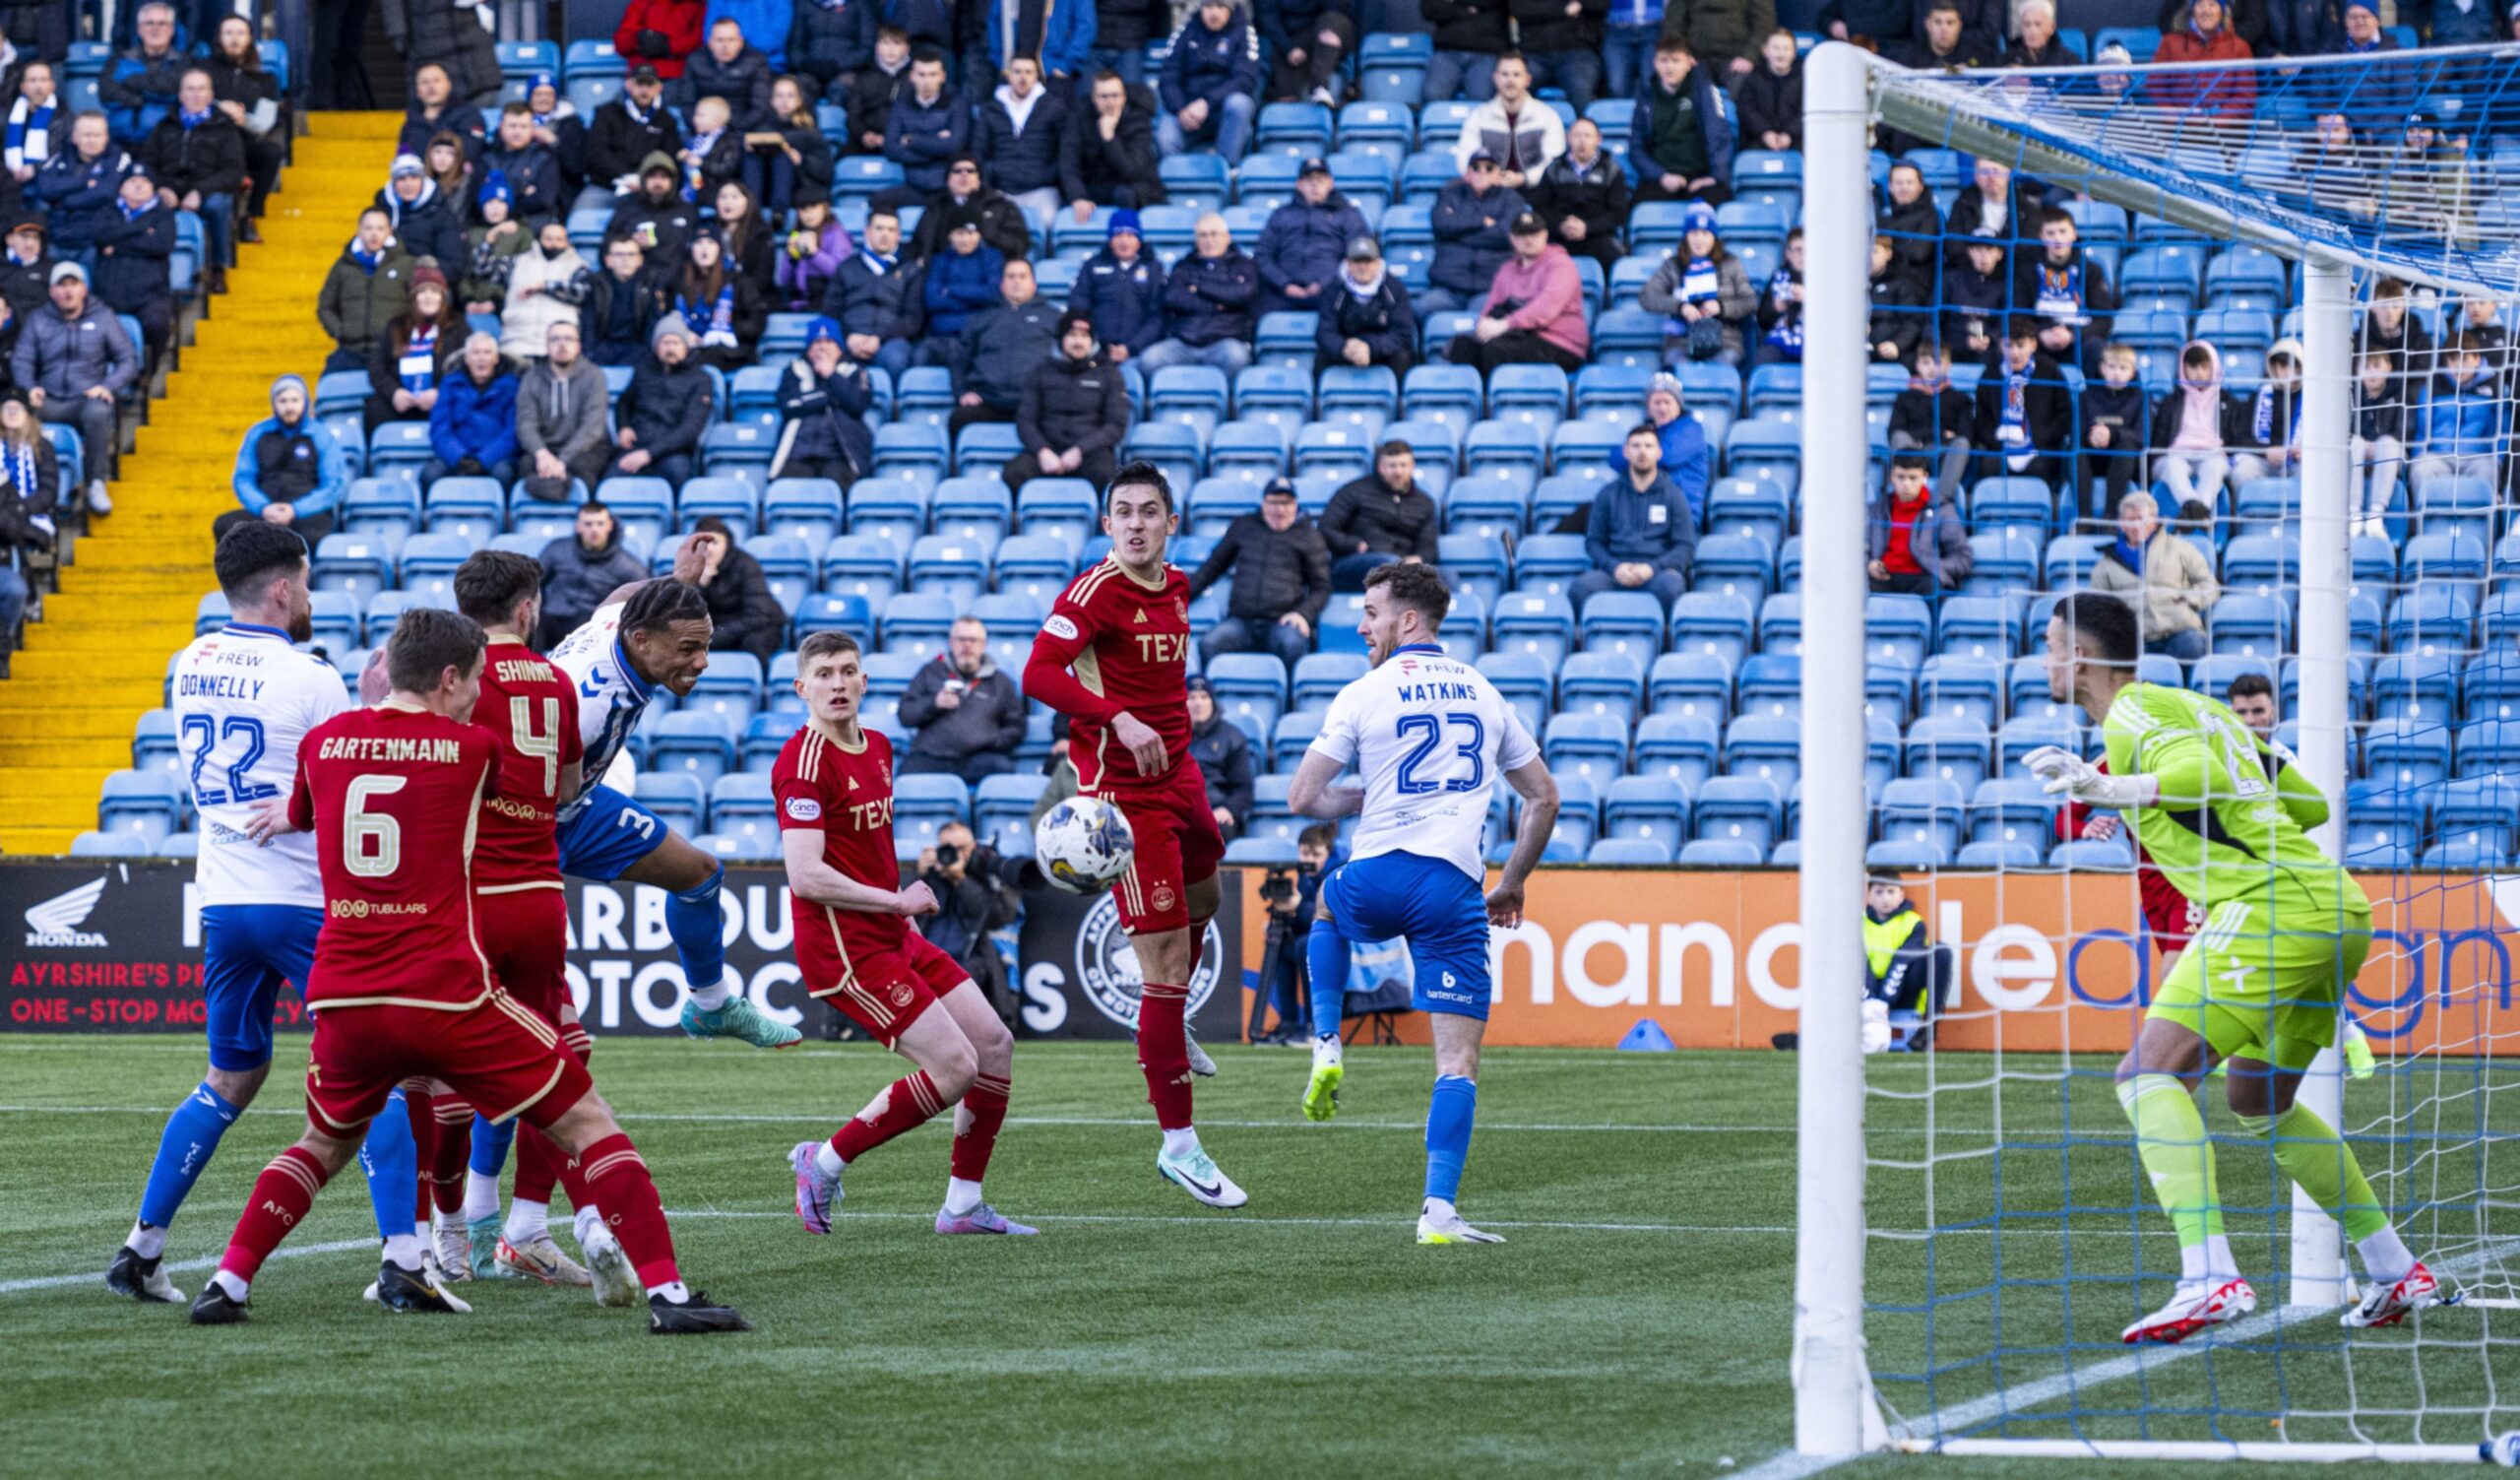 Kilmarnock's Corrie Ndaba scores to make it 1-0 against Aberdeen. 